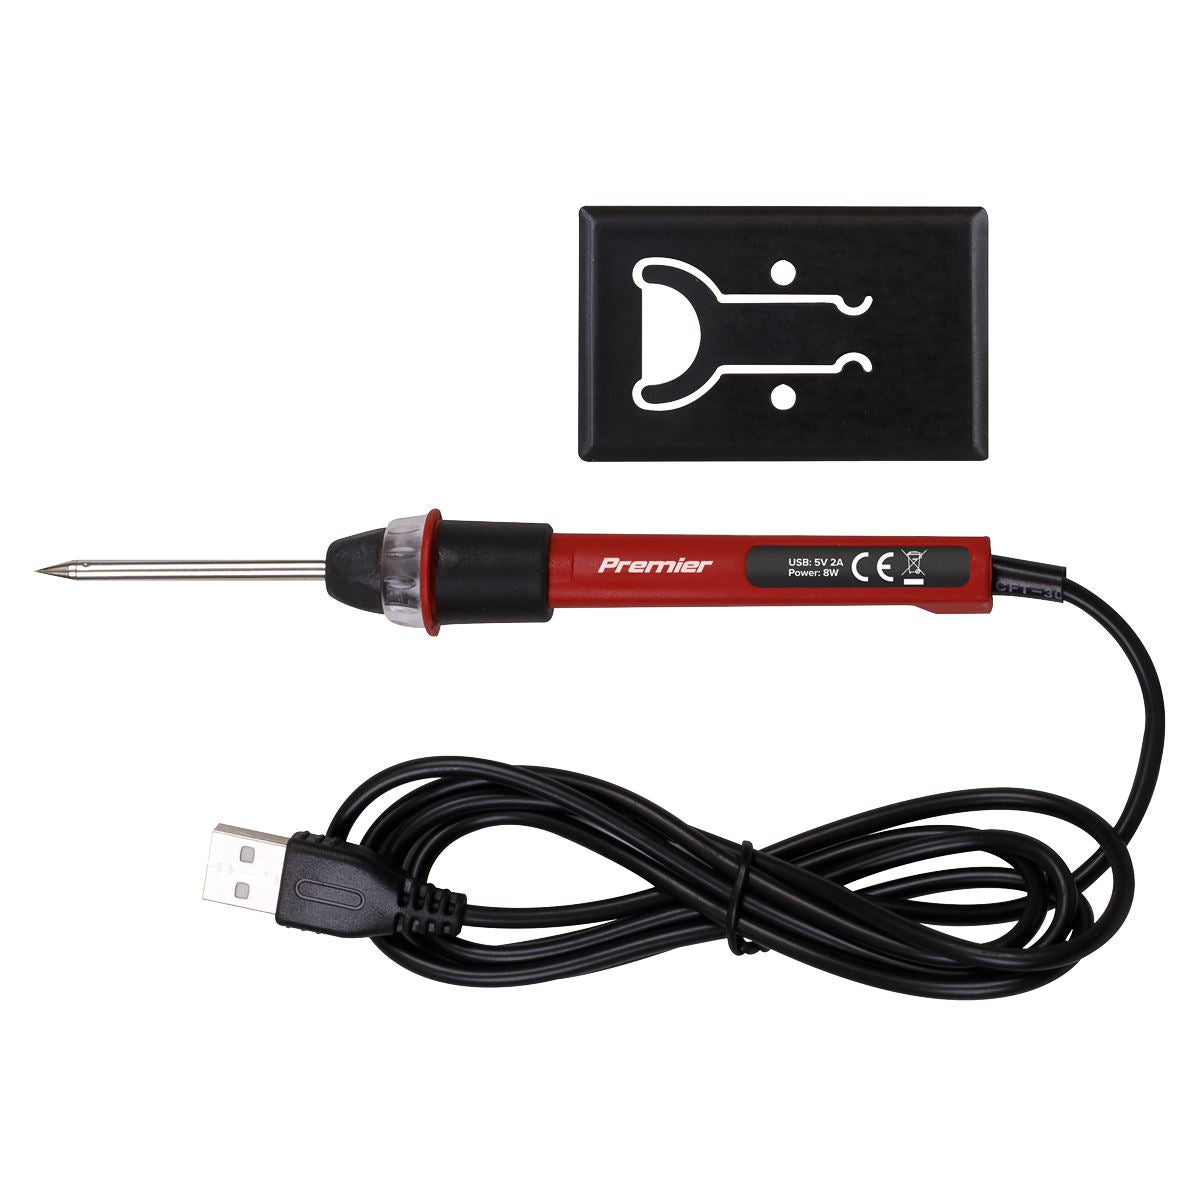 Sealey Premier Soldering Iron USB 8W